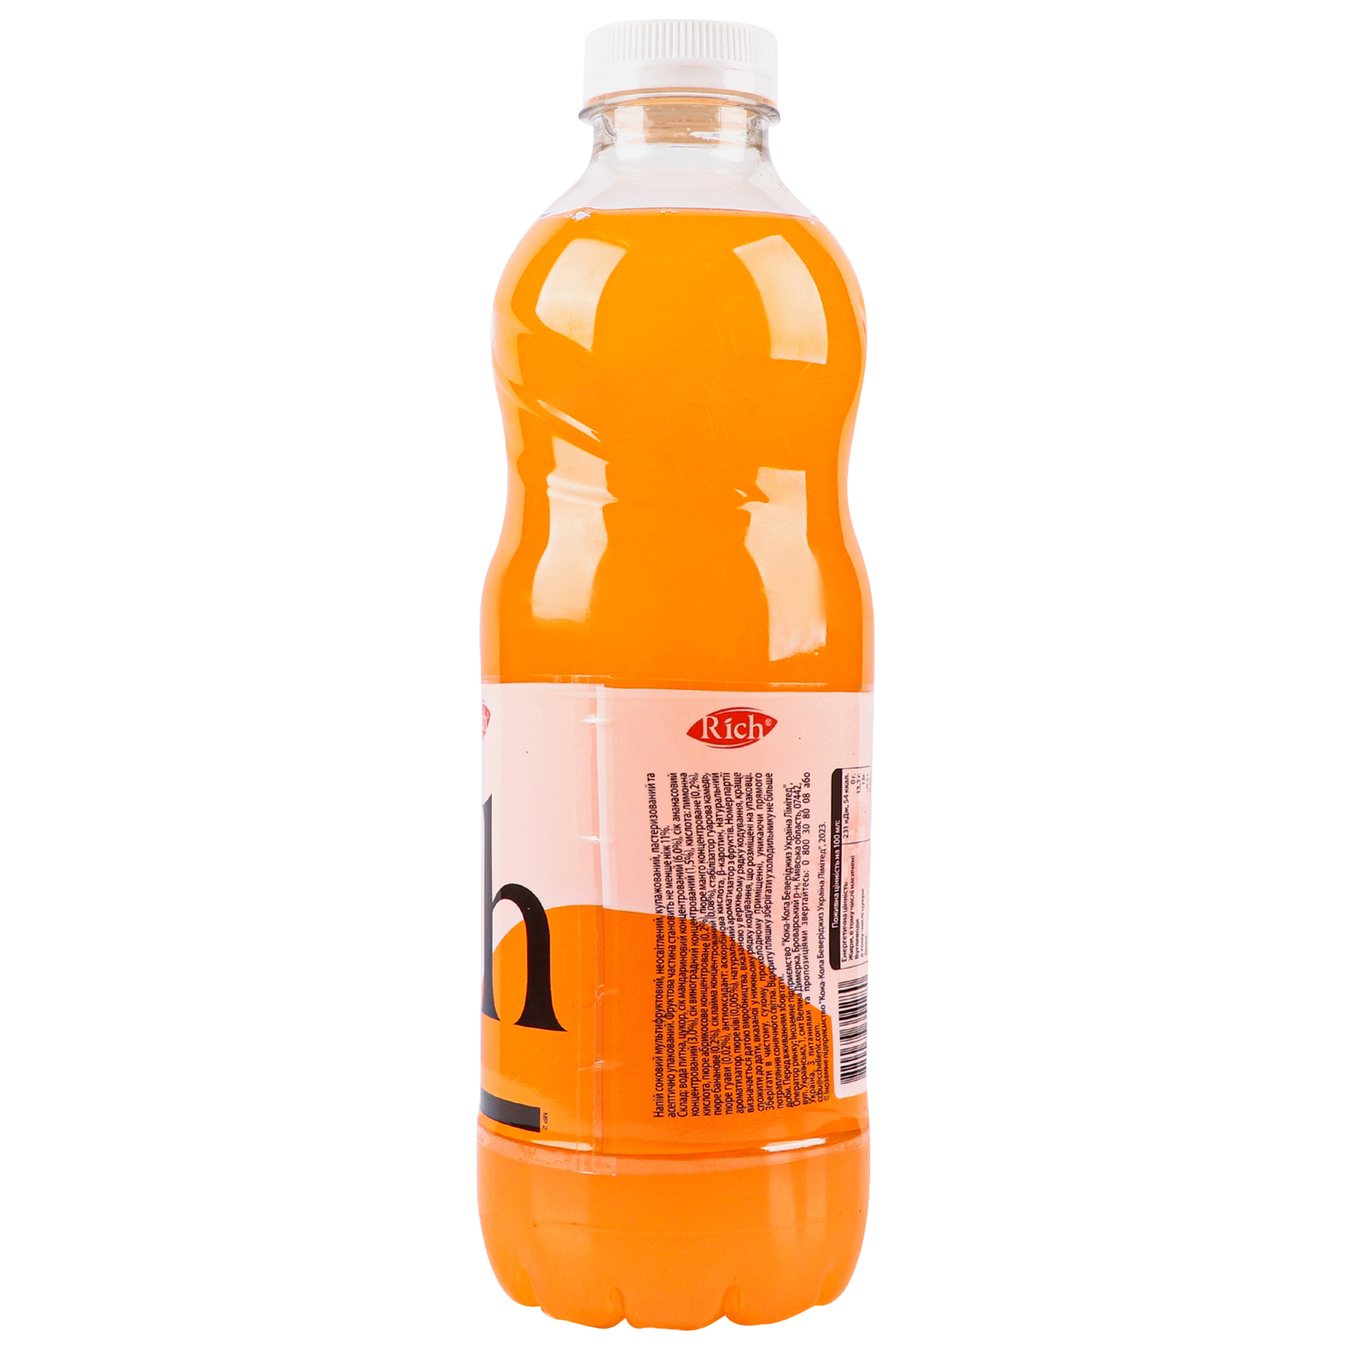 Juice drink Rich multifruit 1 liter 4